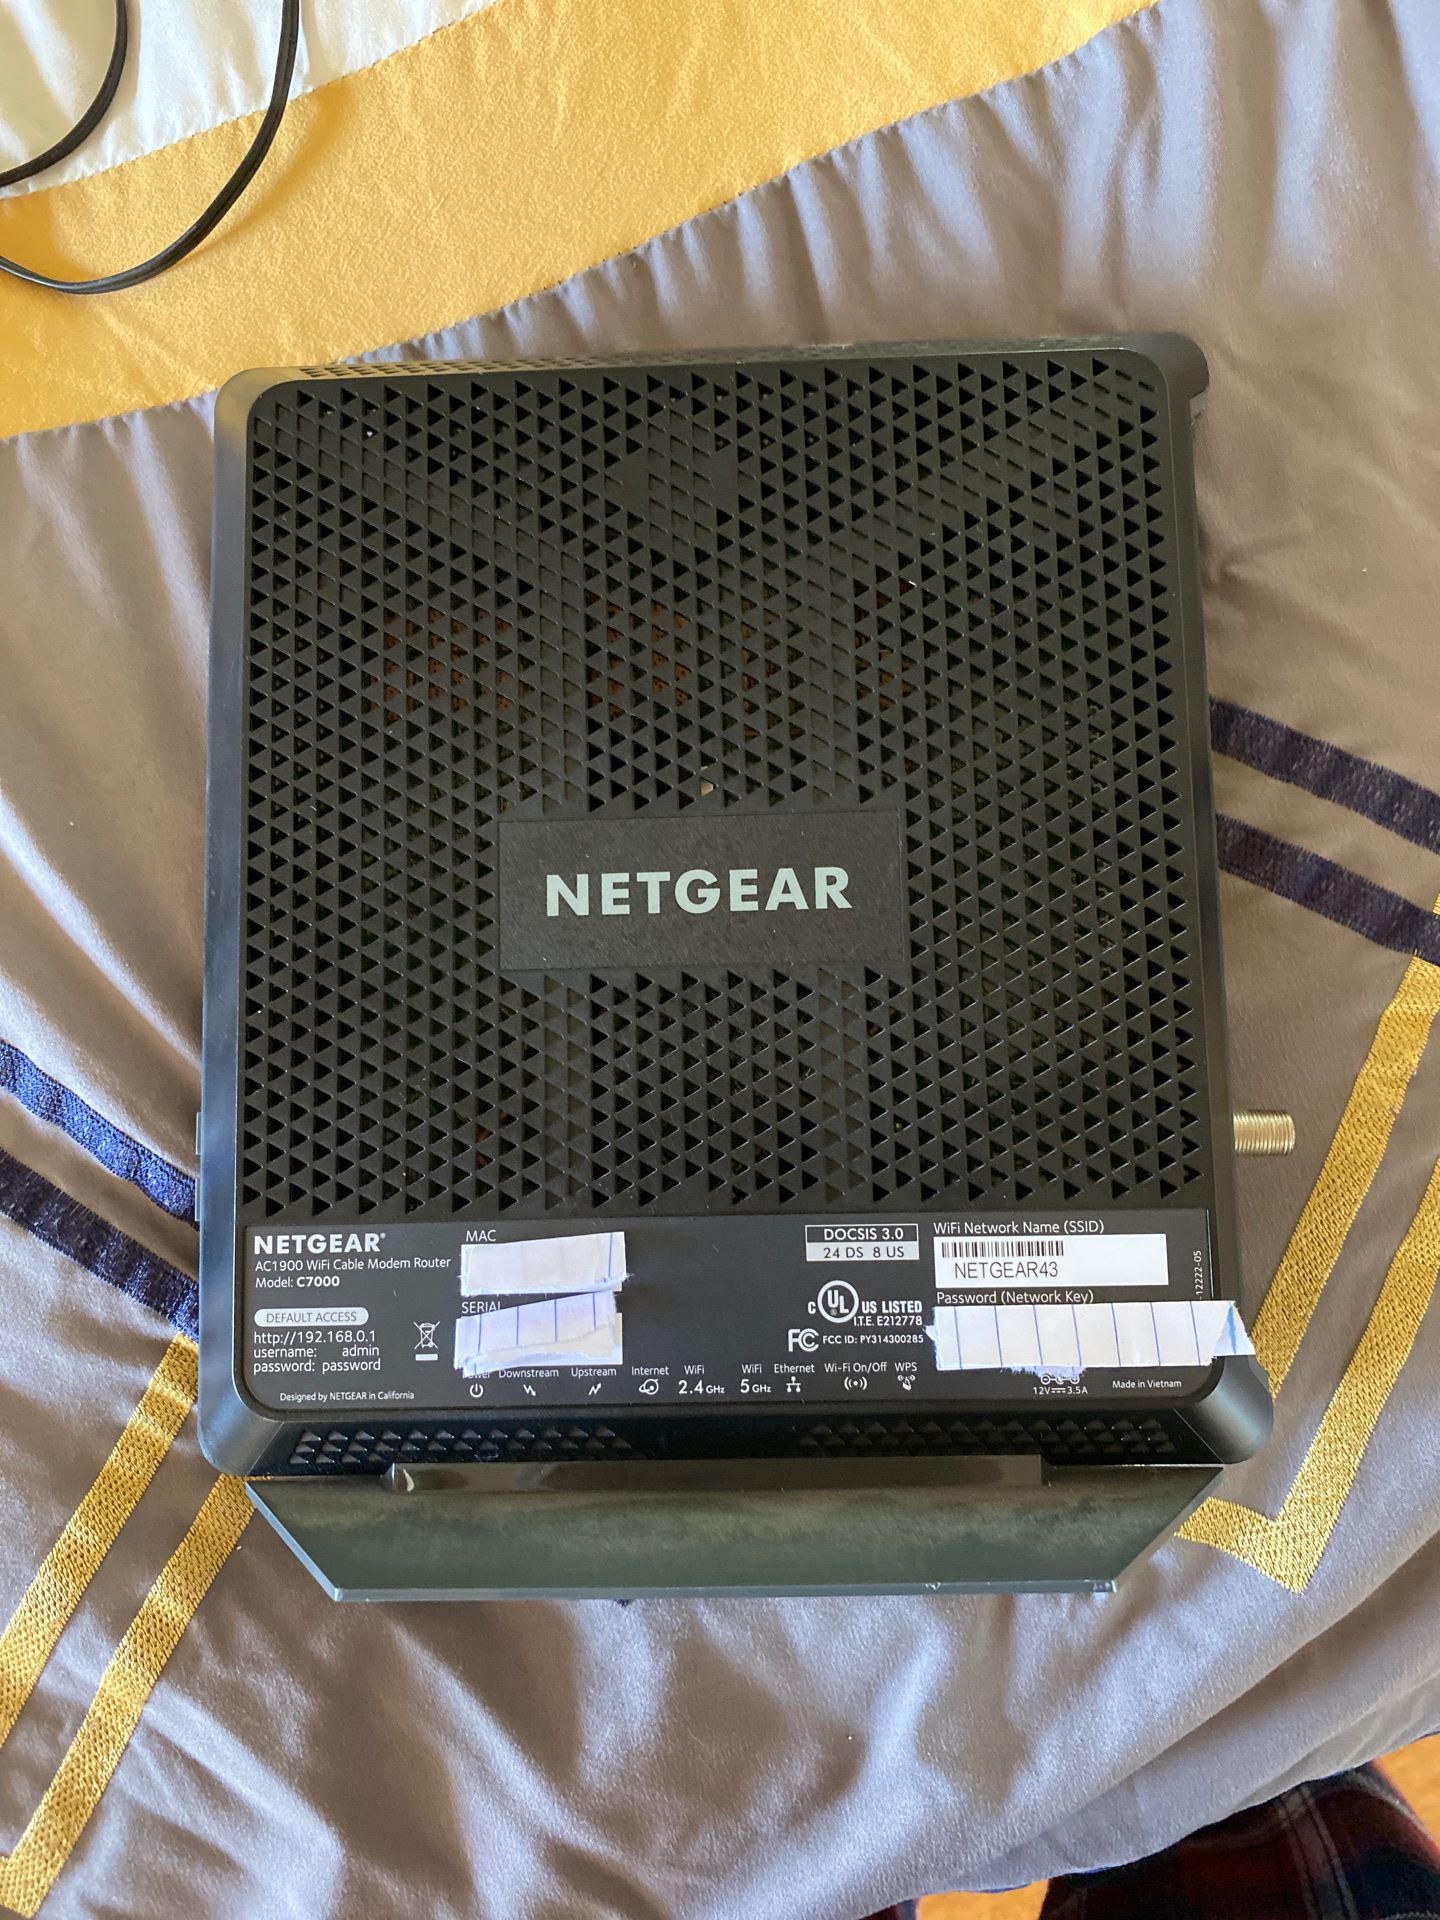 Netgear Nighthawk C7000 AC1900 WiFi Modem Router